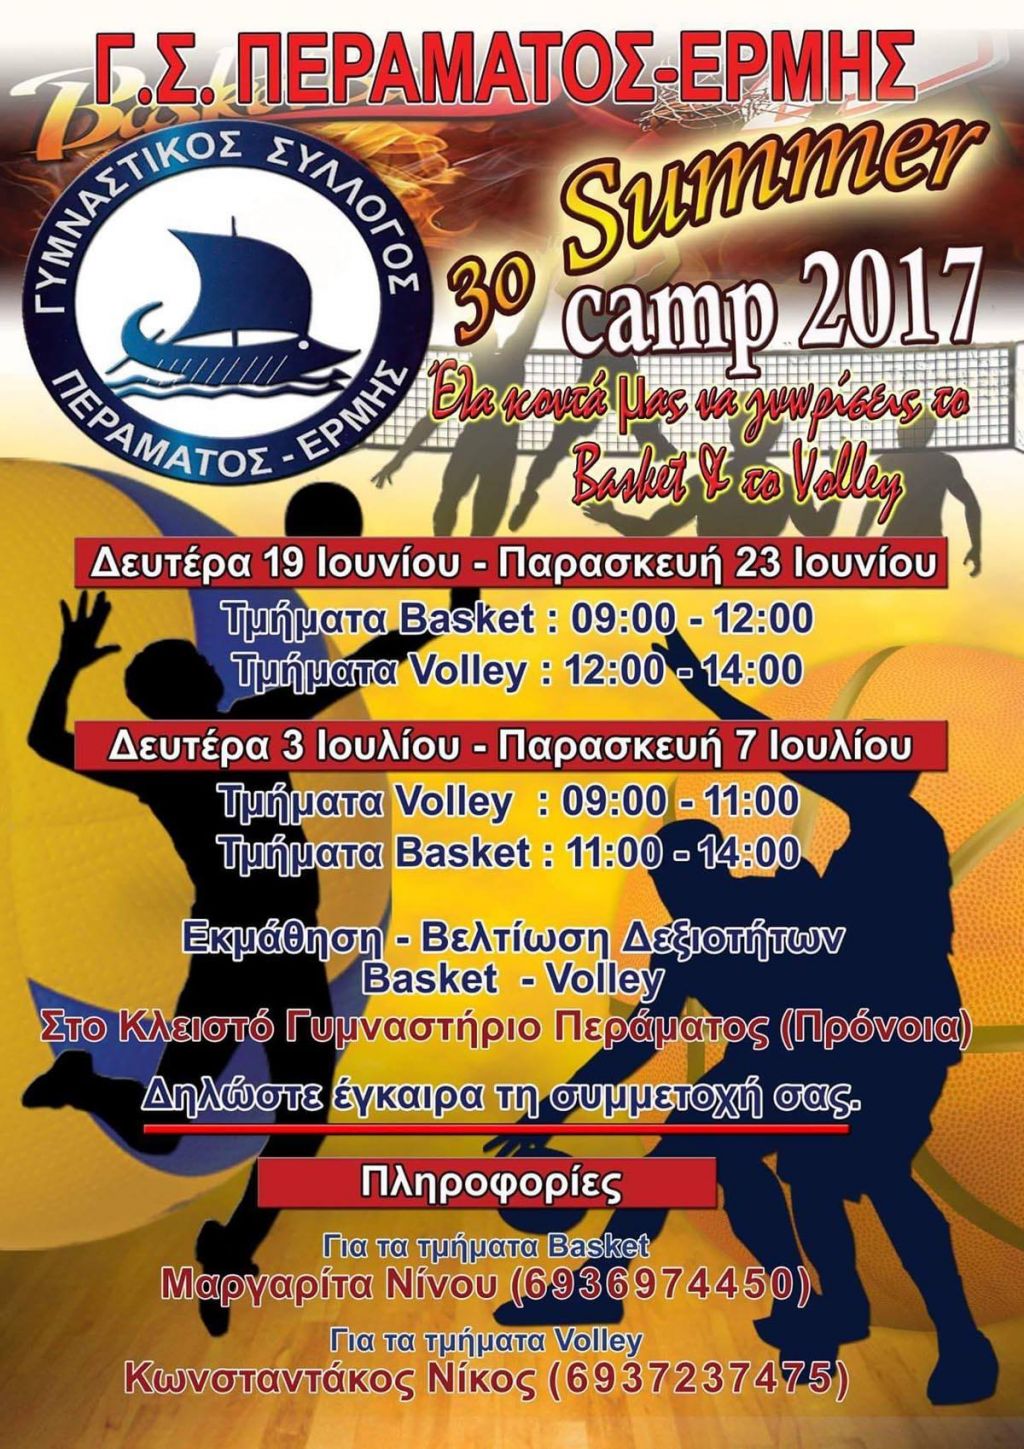 3o Summer camp από τον Γ.Σ. Περάματος - Ερμής